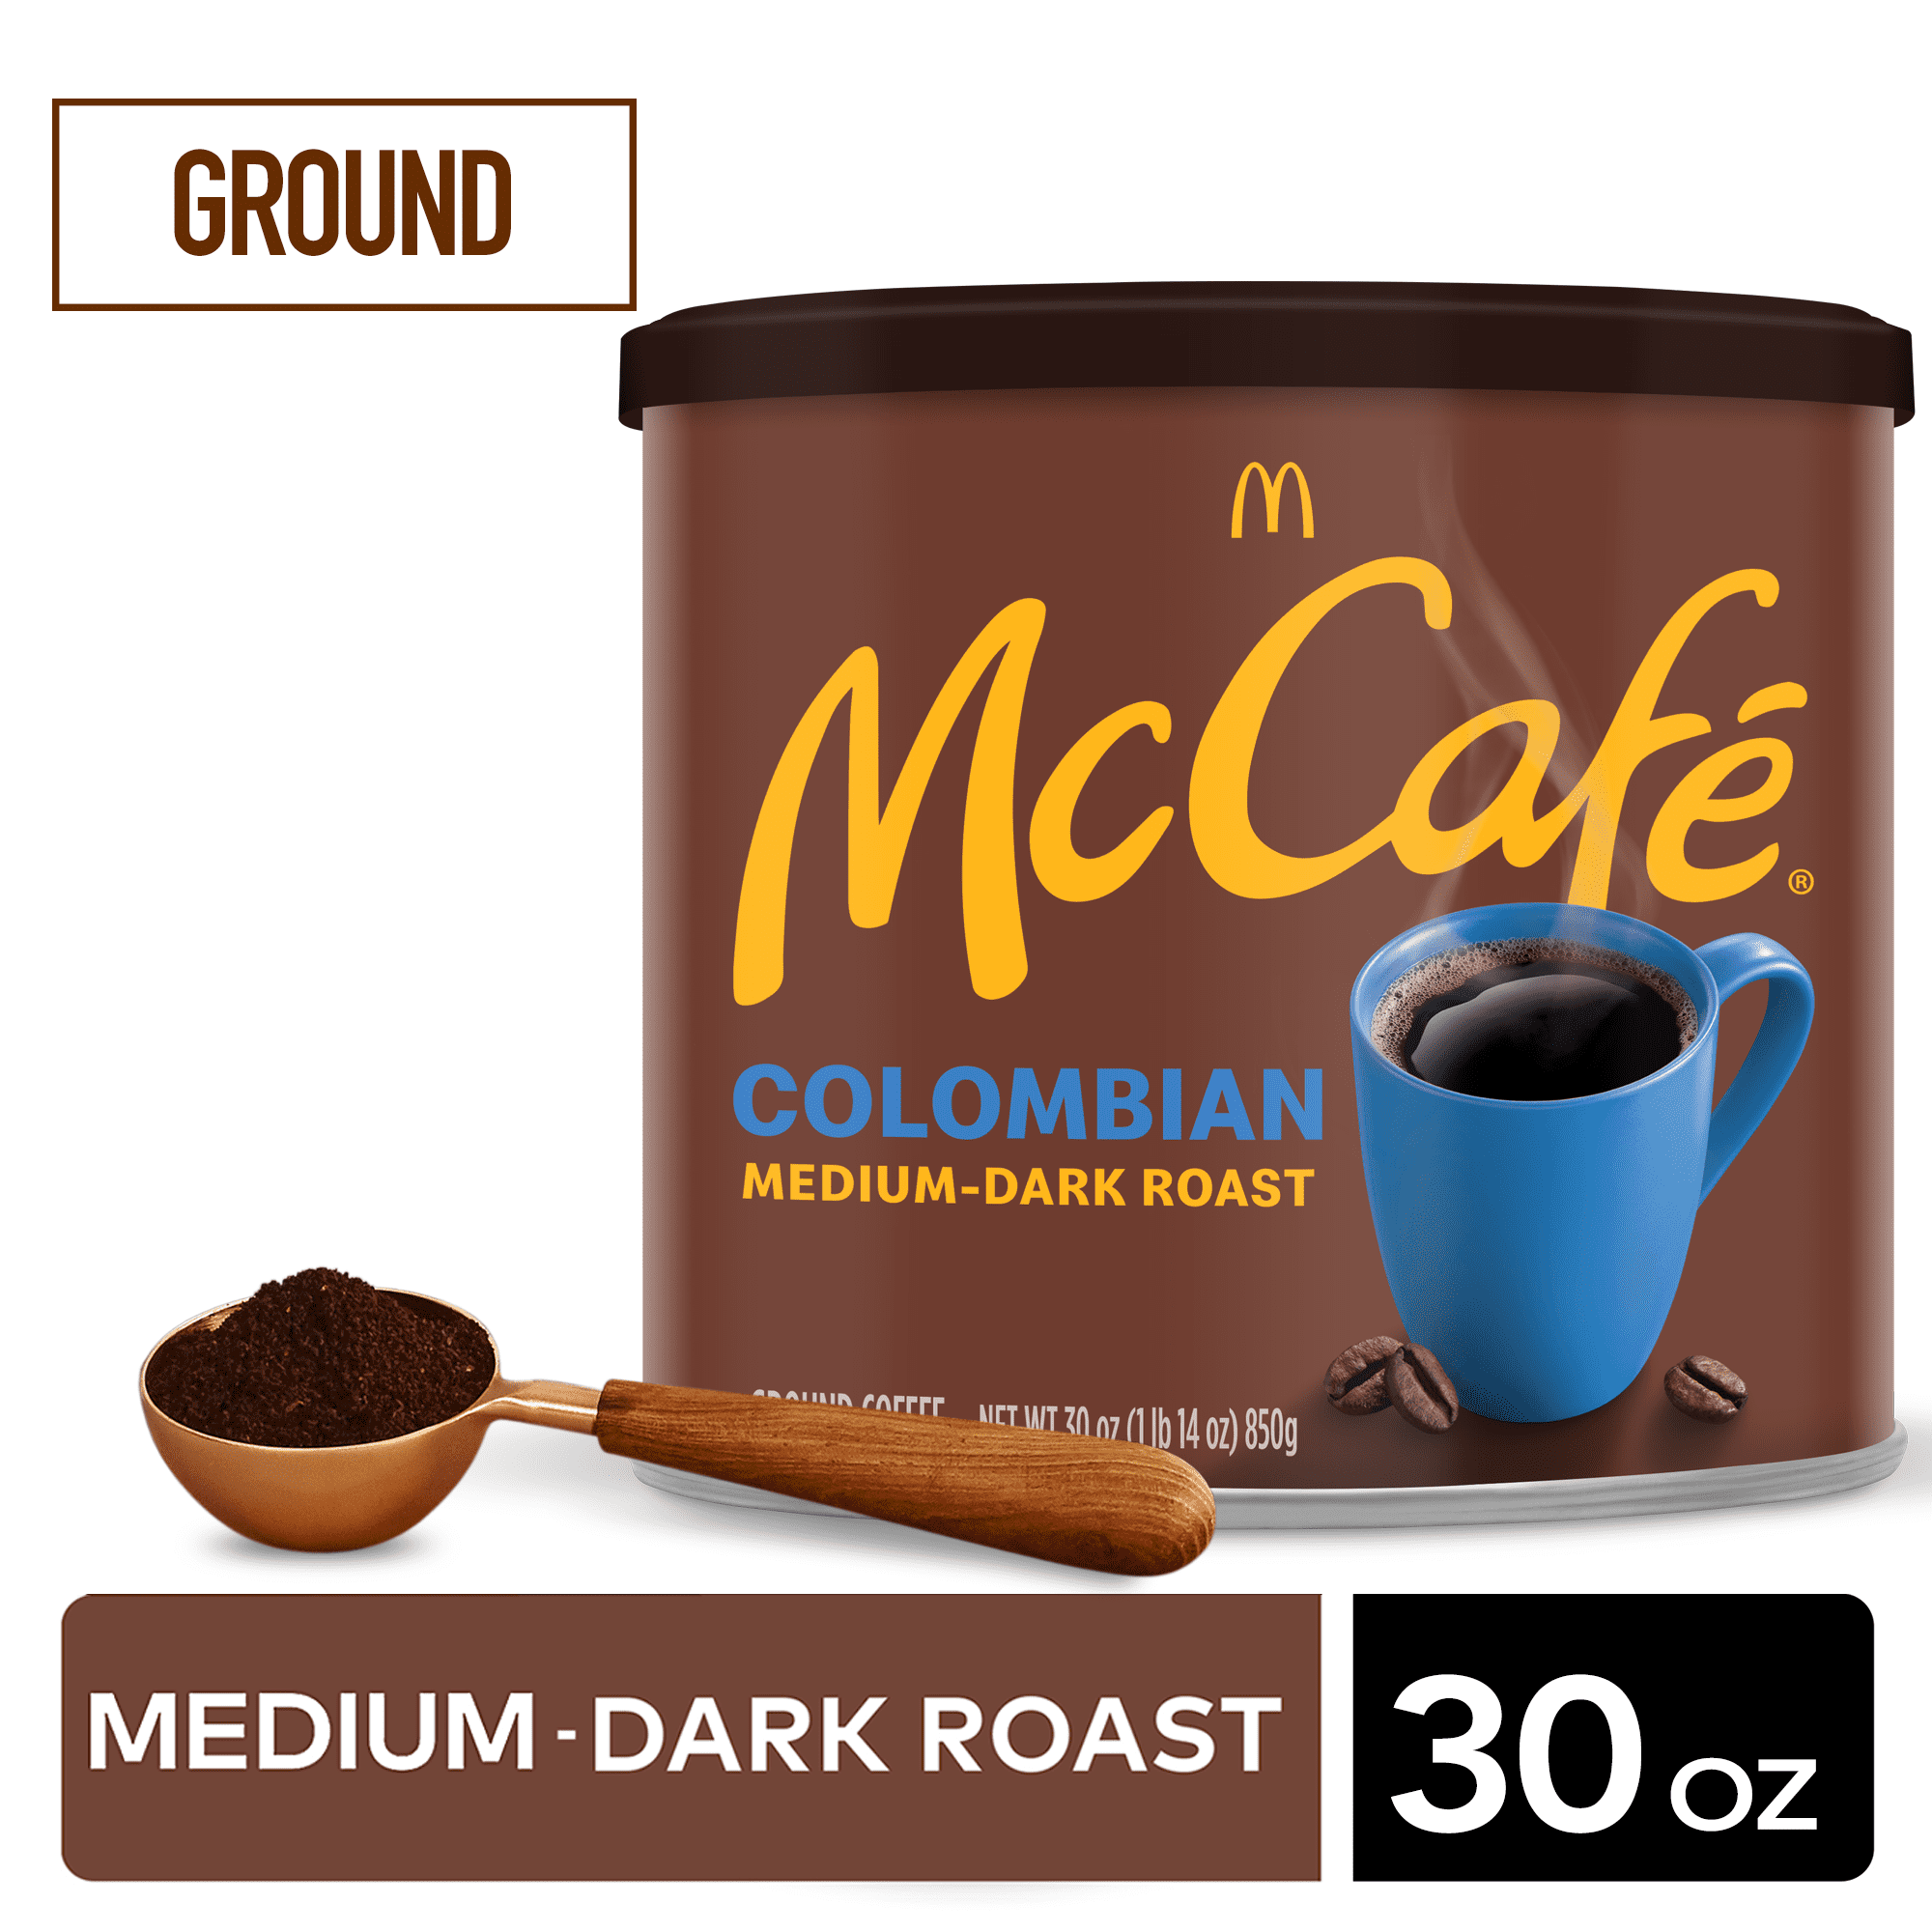 Mccafe Colombian Coffee Walmart McCafe Premium Roast